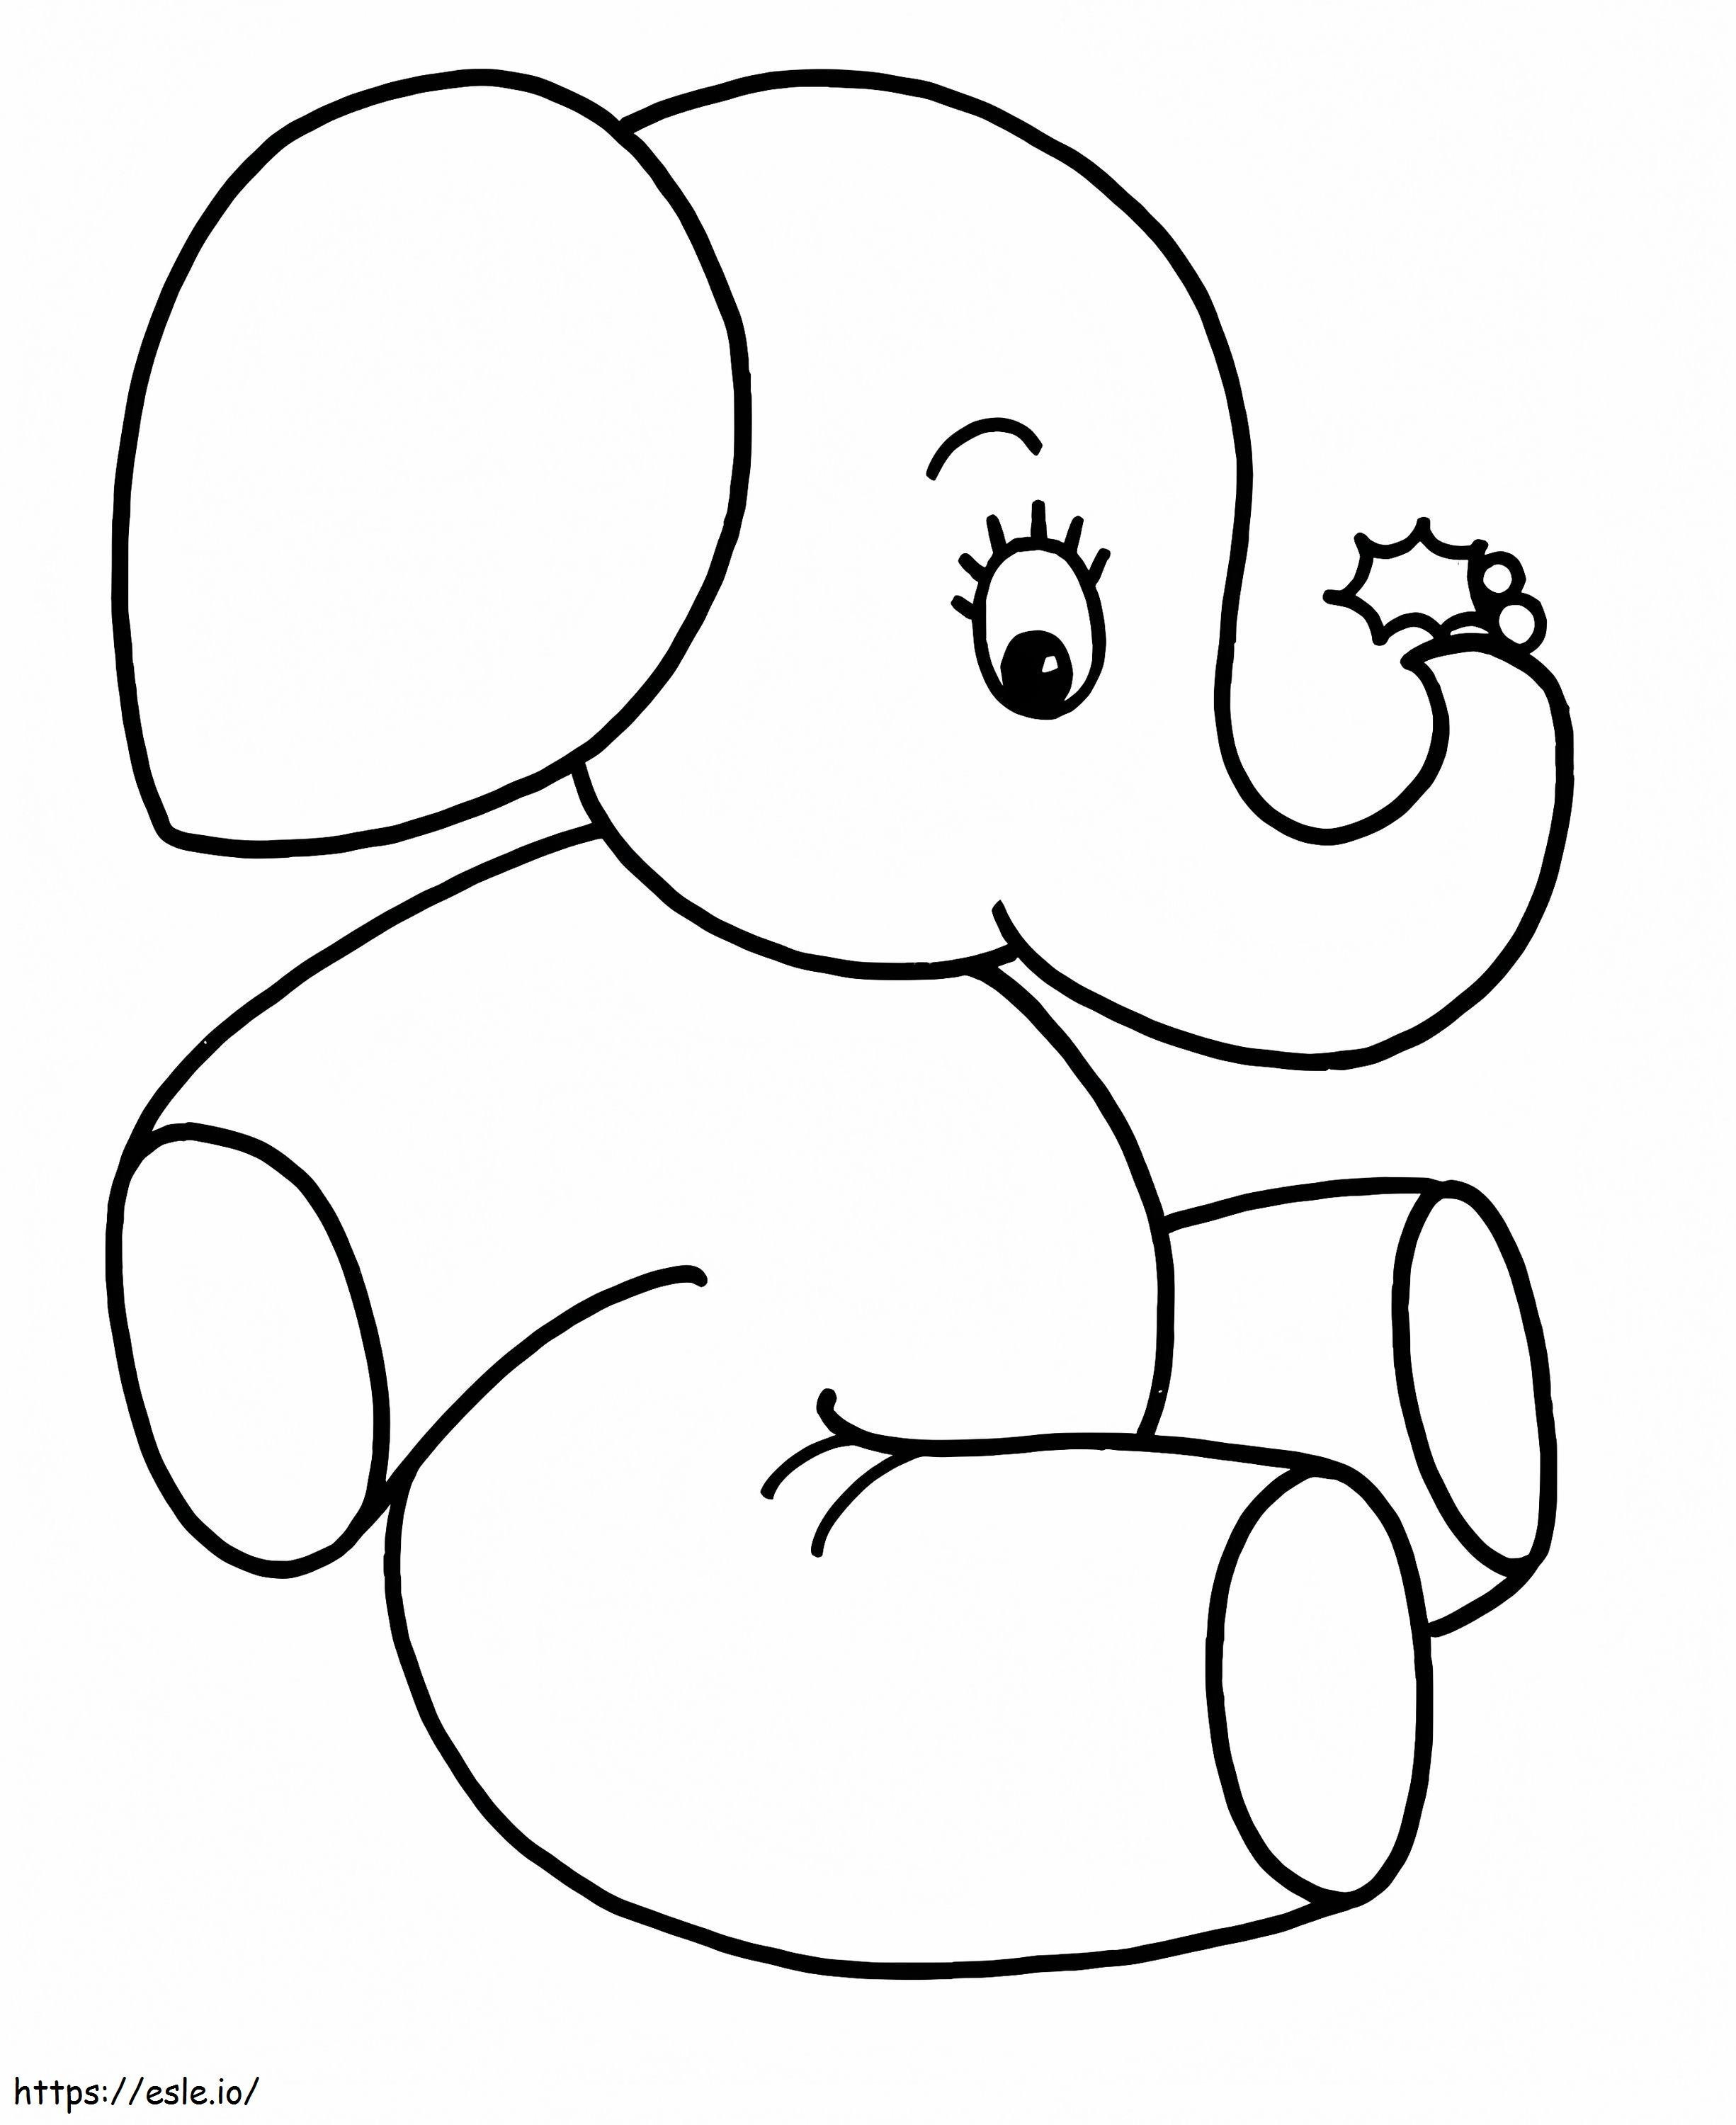 Sentado de elefante fácil para colorear